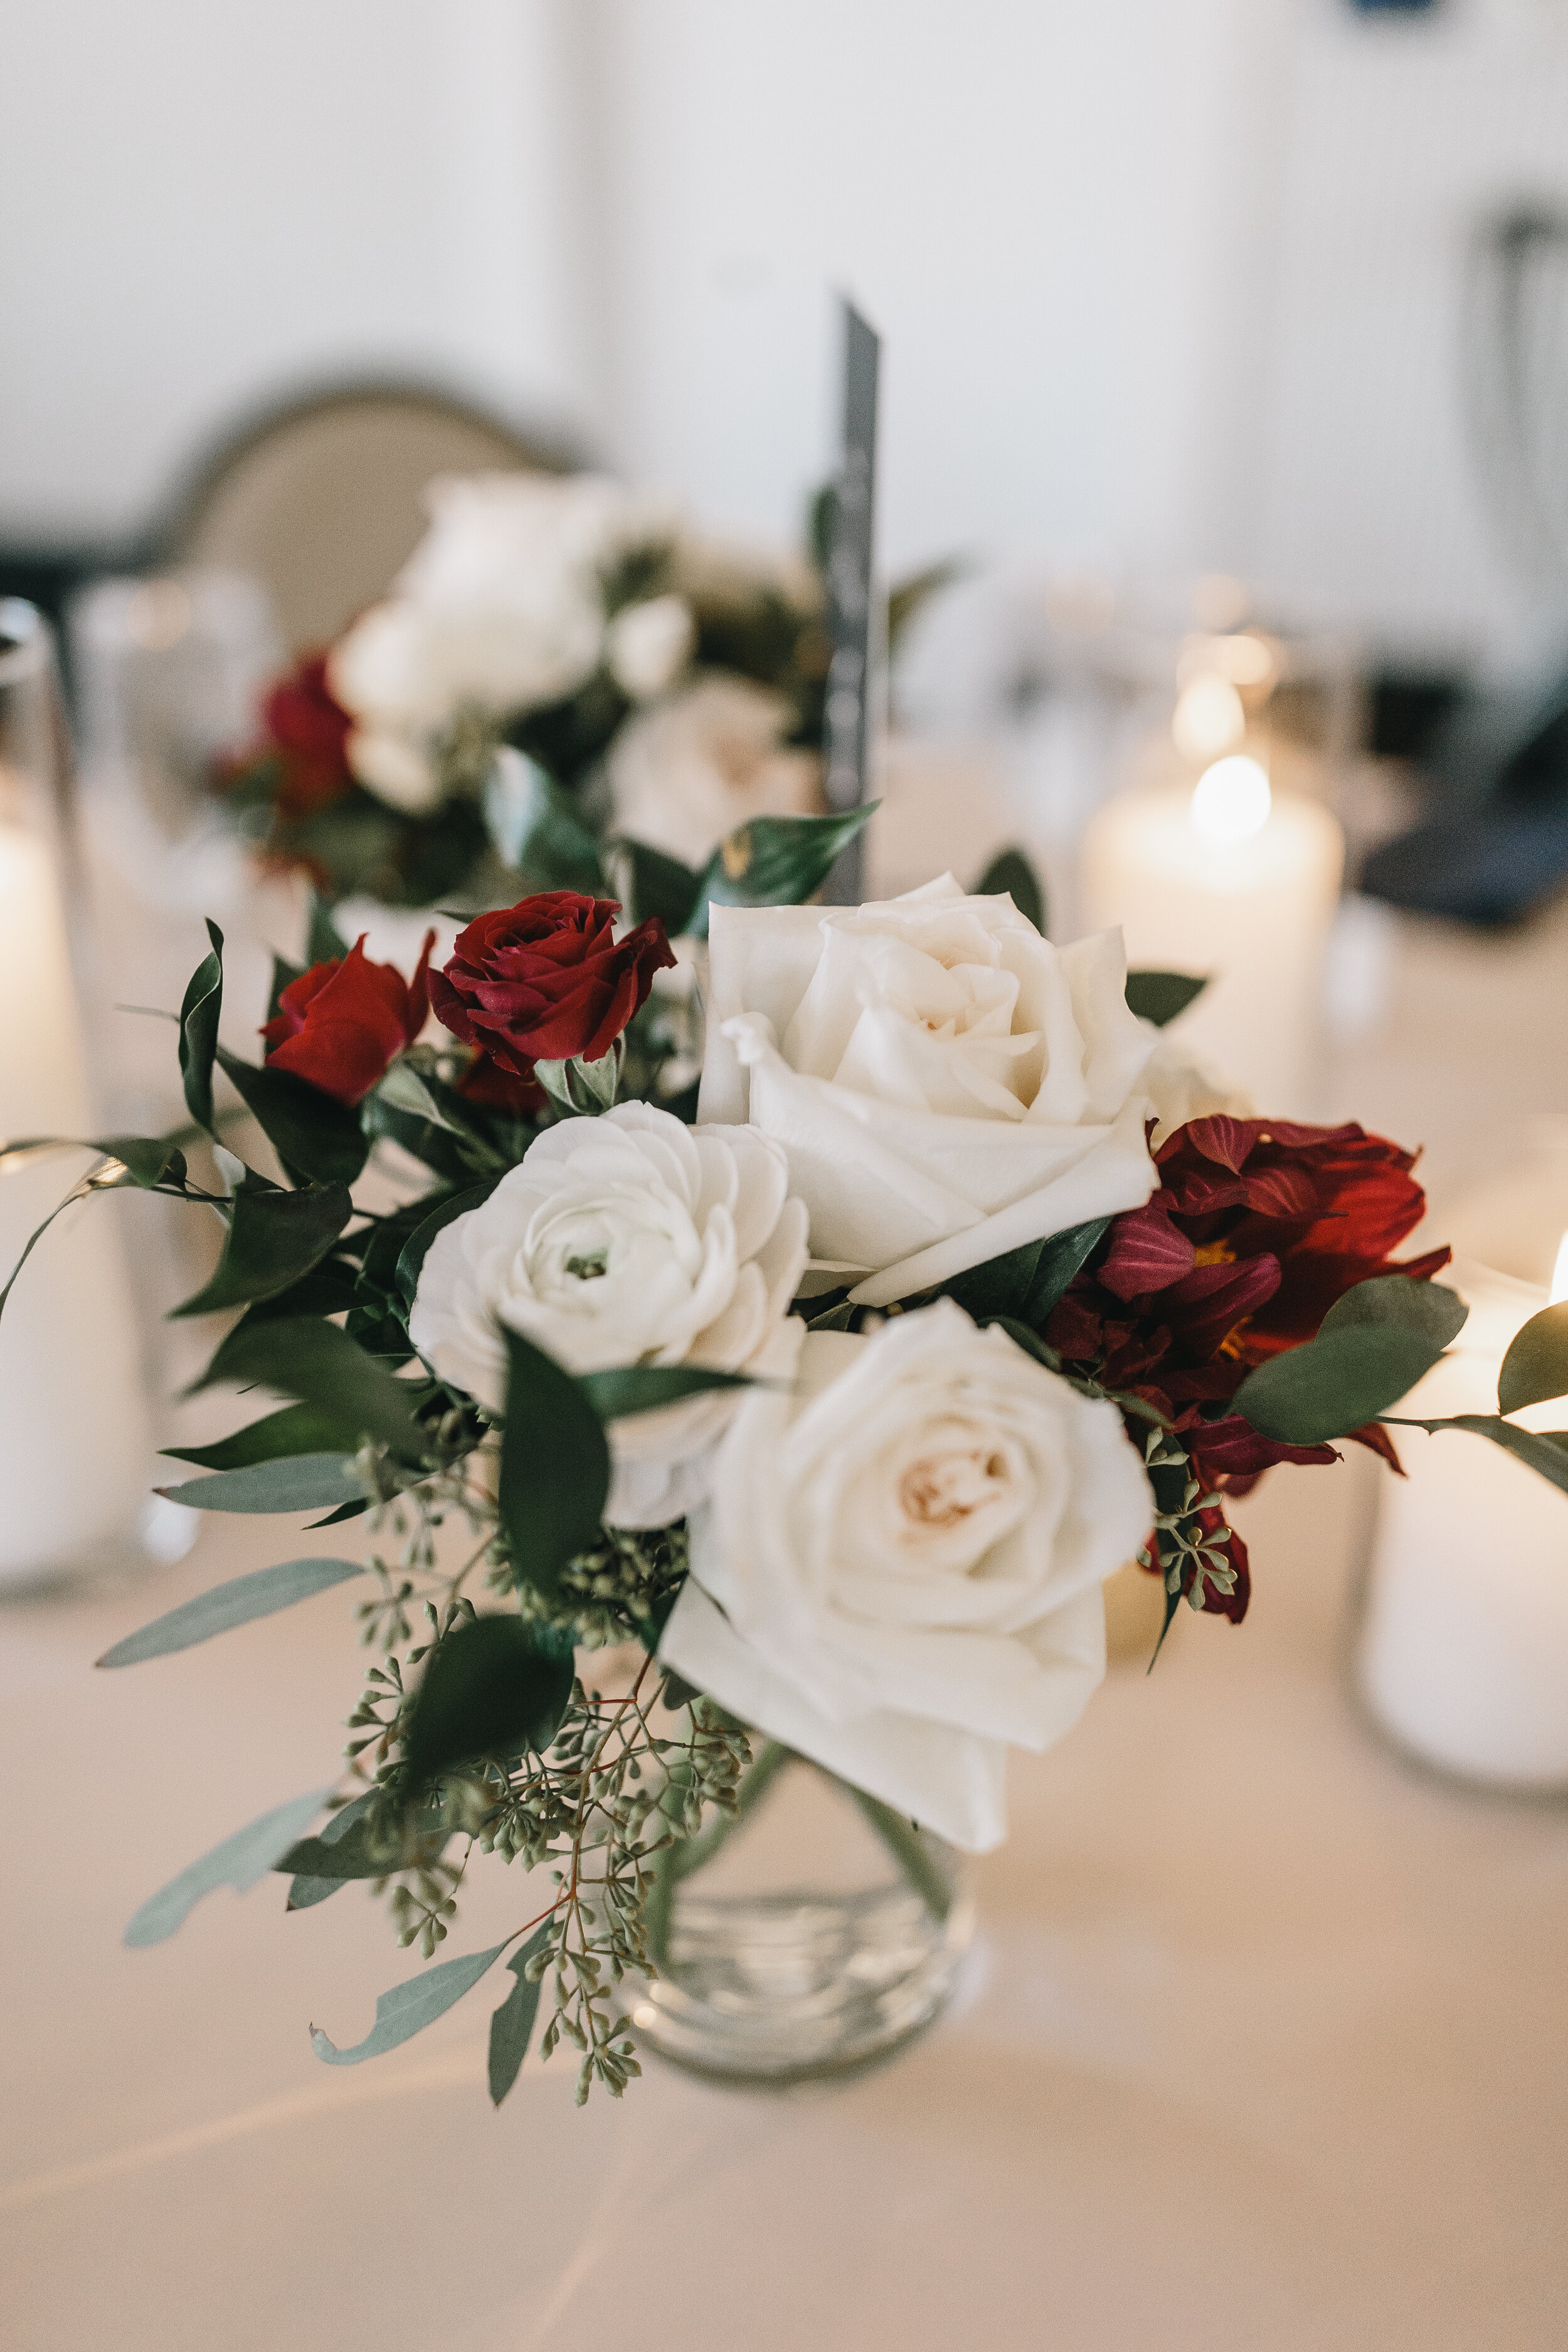 carats-and-cake-ivory-and-beau-florals-jordan-and-michael-wedding-flowers-wedding-florals-wedding-blog-feature-wedding-inspo-wedding-inspiration-savannah-florist-floral-design-floral-designer-flower-shop-Jordan+Michael_weddingsneaks-60.jpg